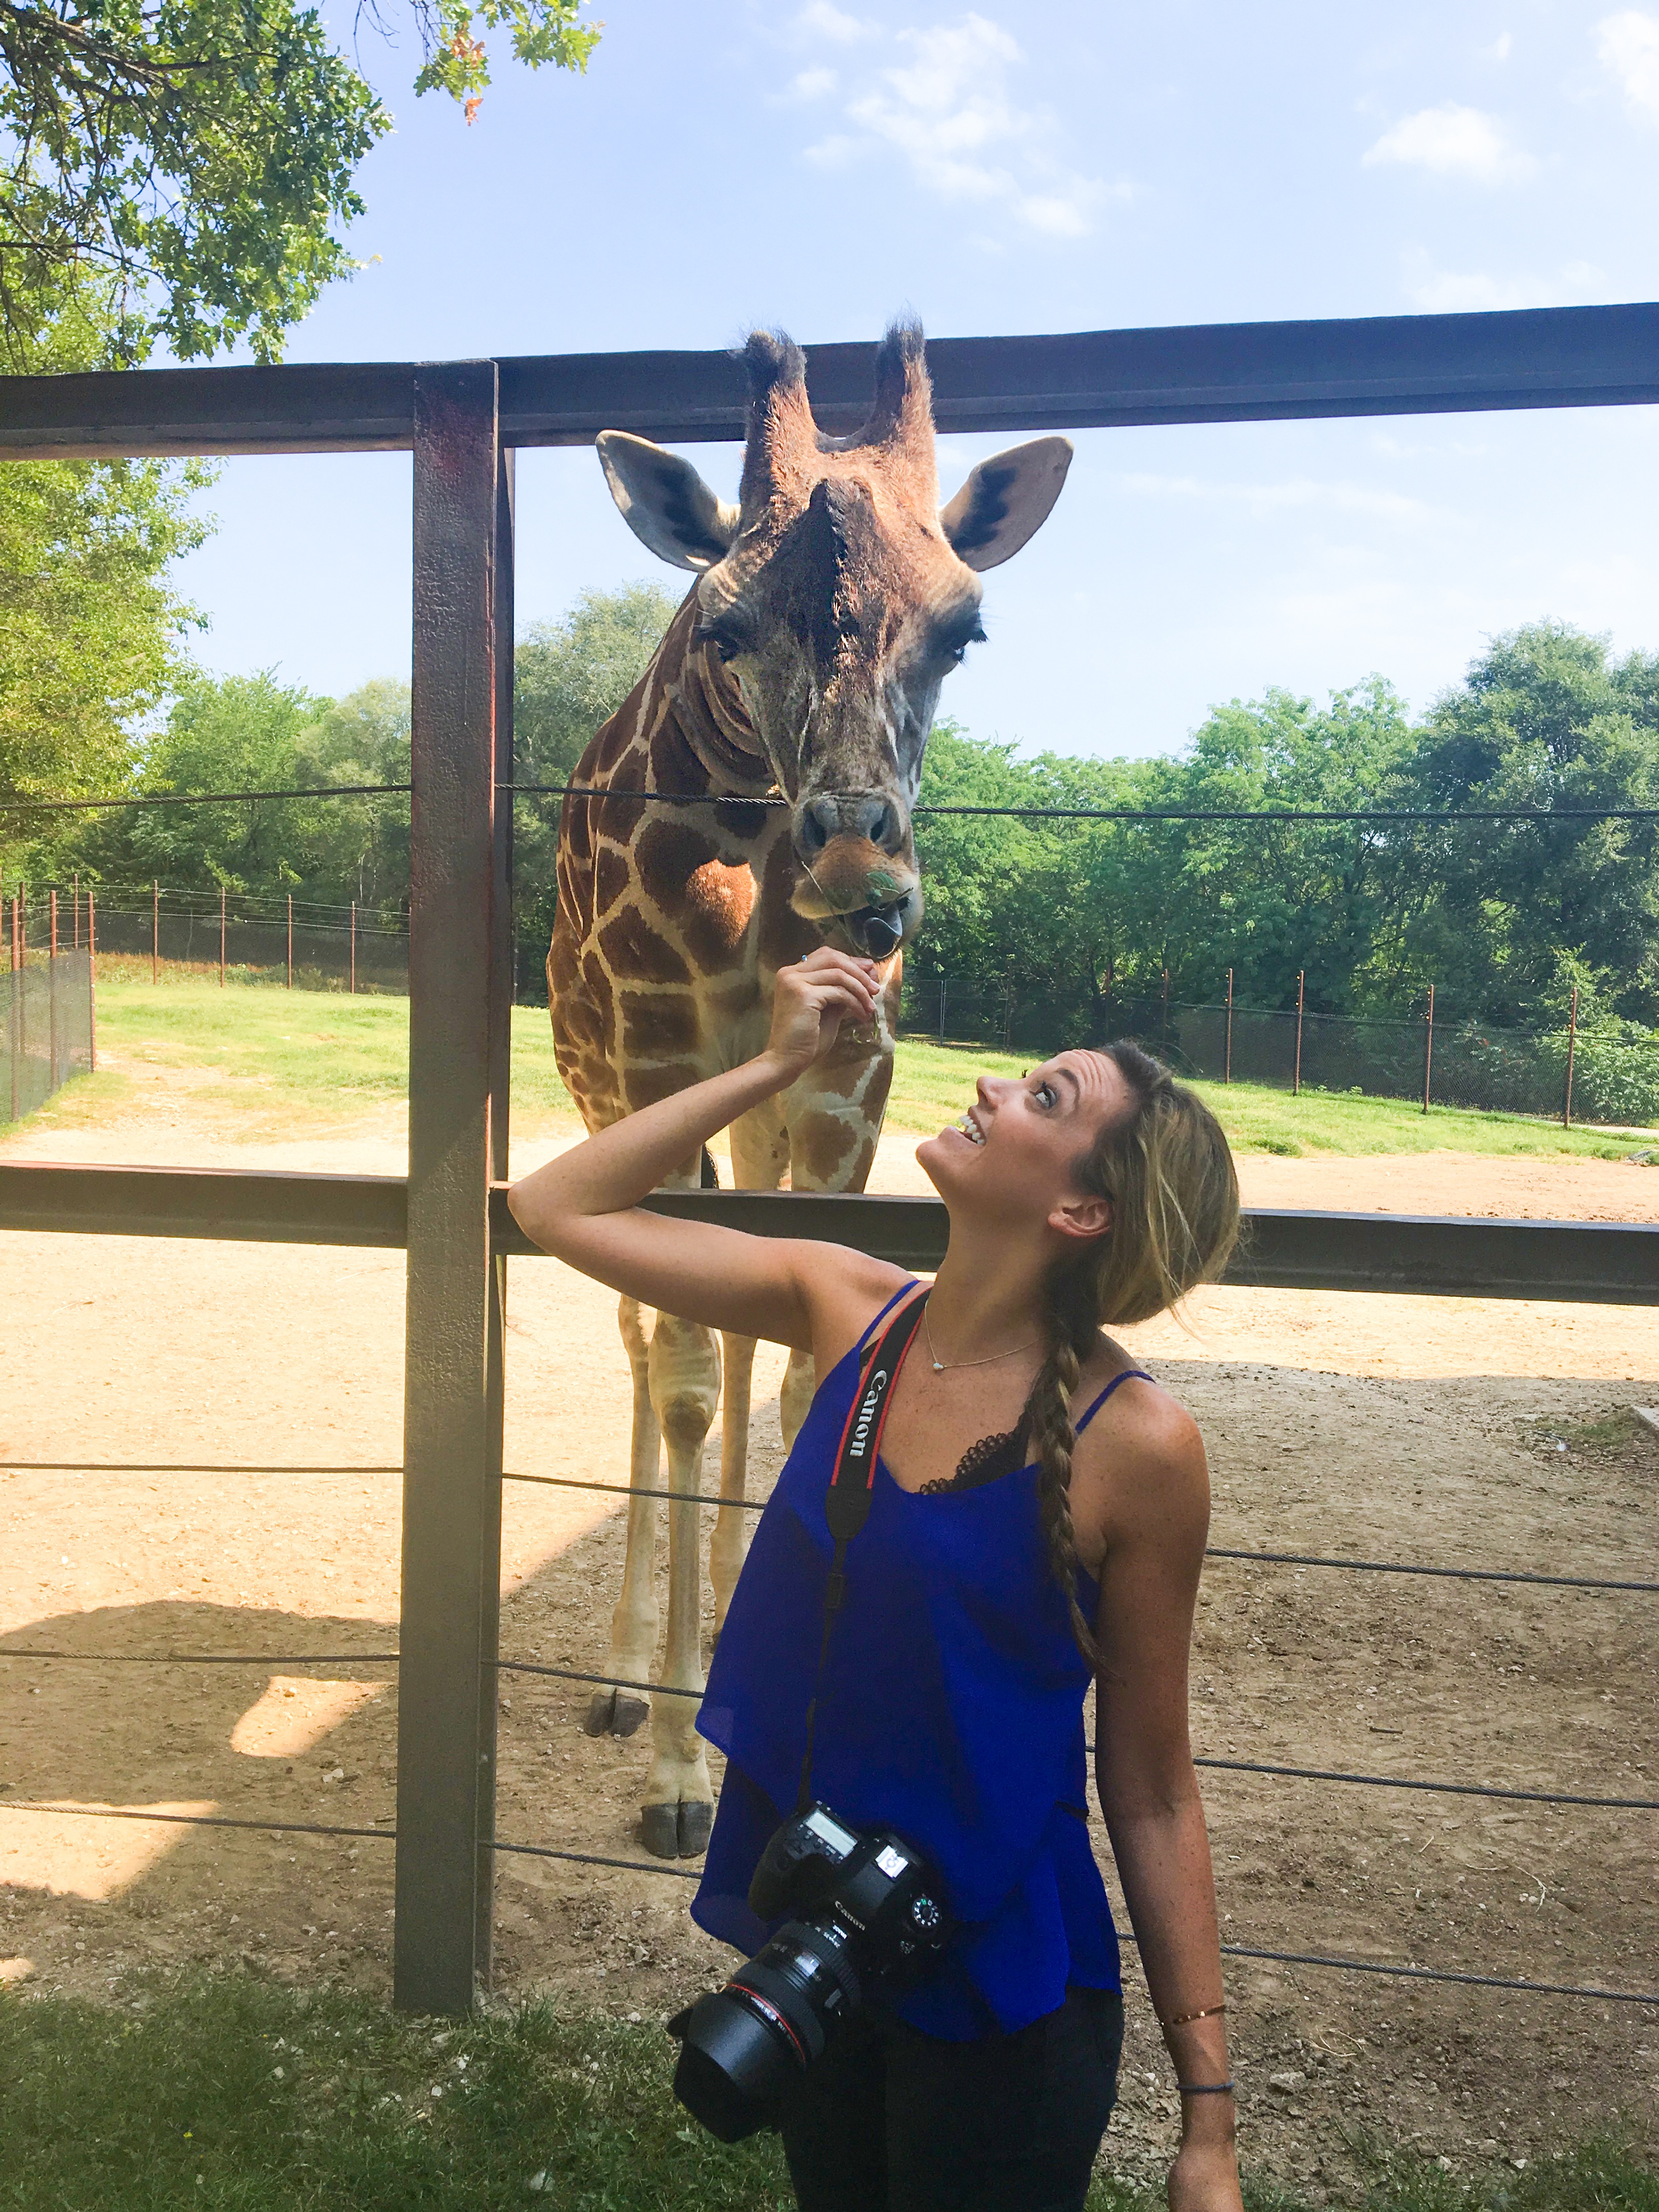 Chelsea and a giraffe